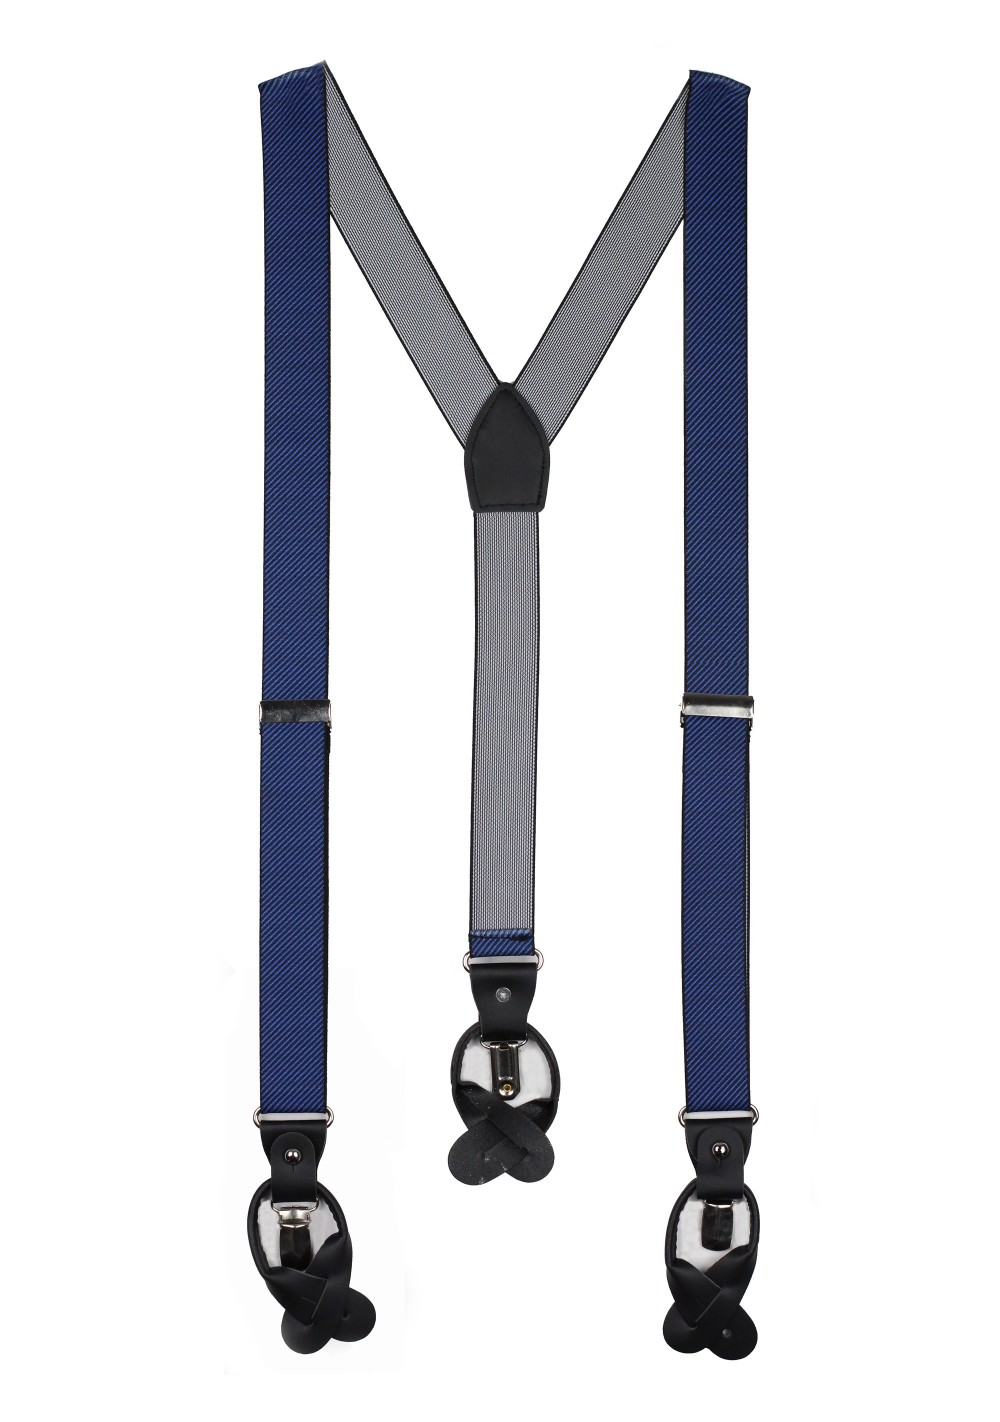 navy blue pin striped mens dress suspenders